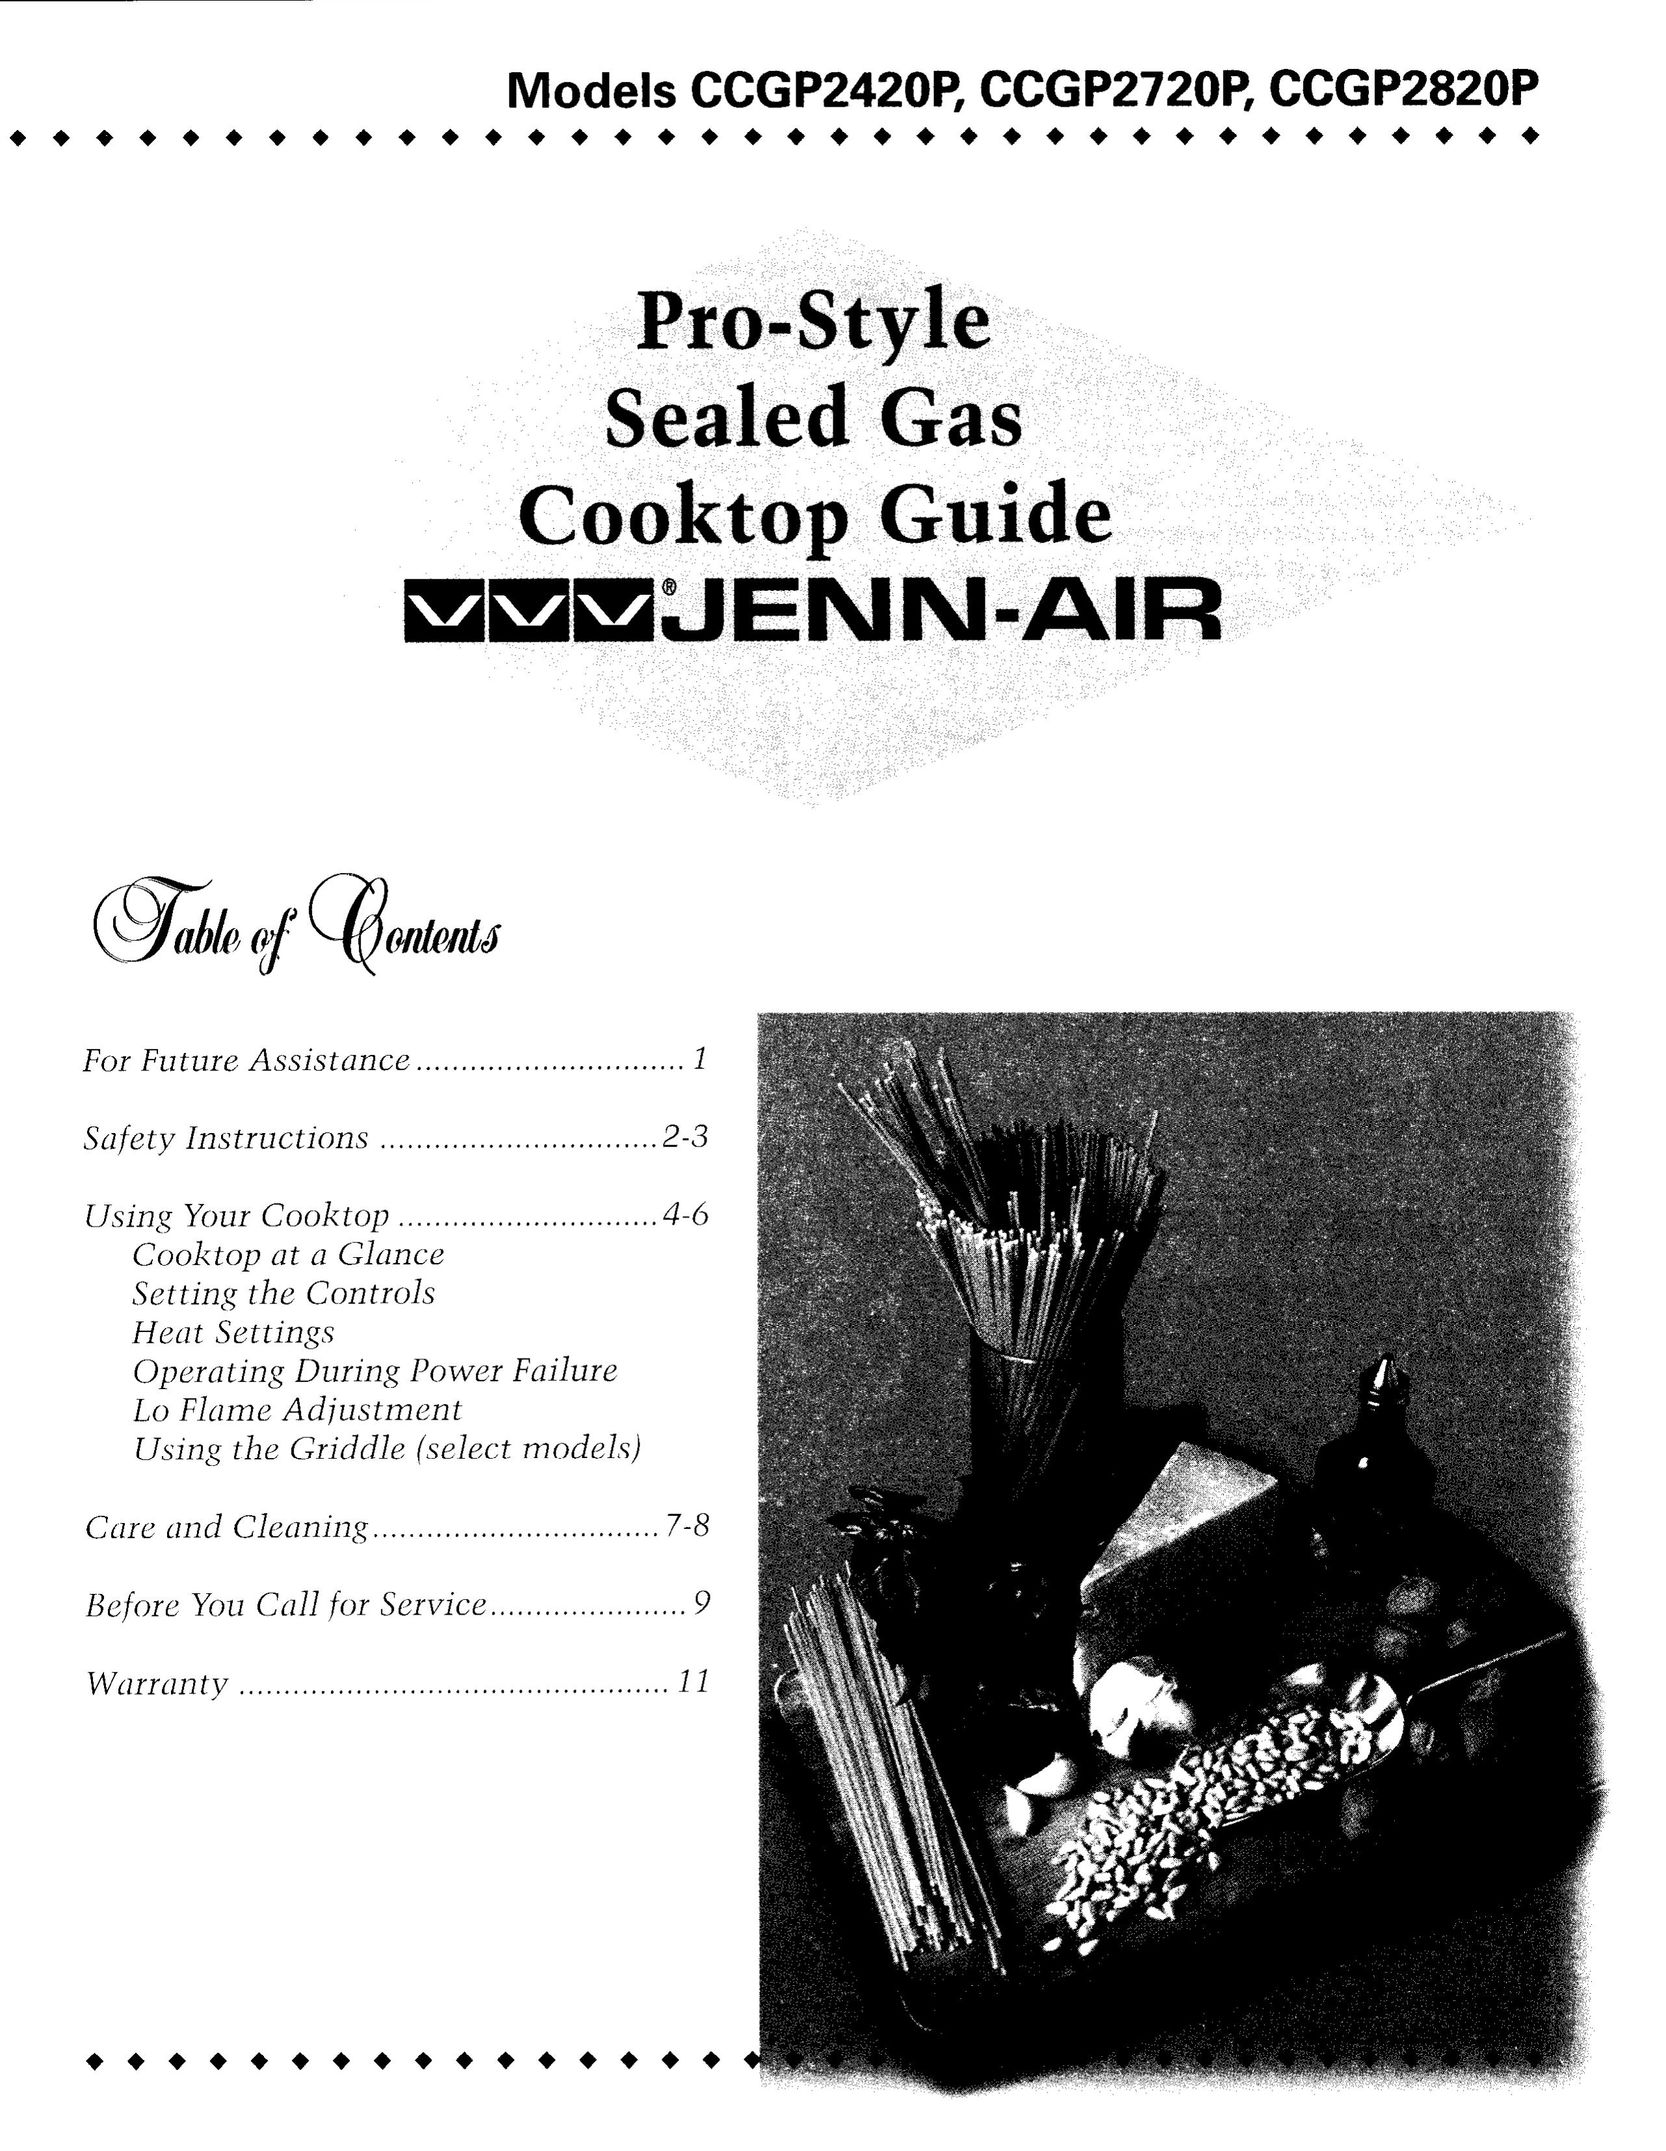 Jenn-Air CCGP2720P Cooktop User Manual